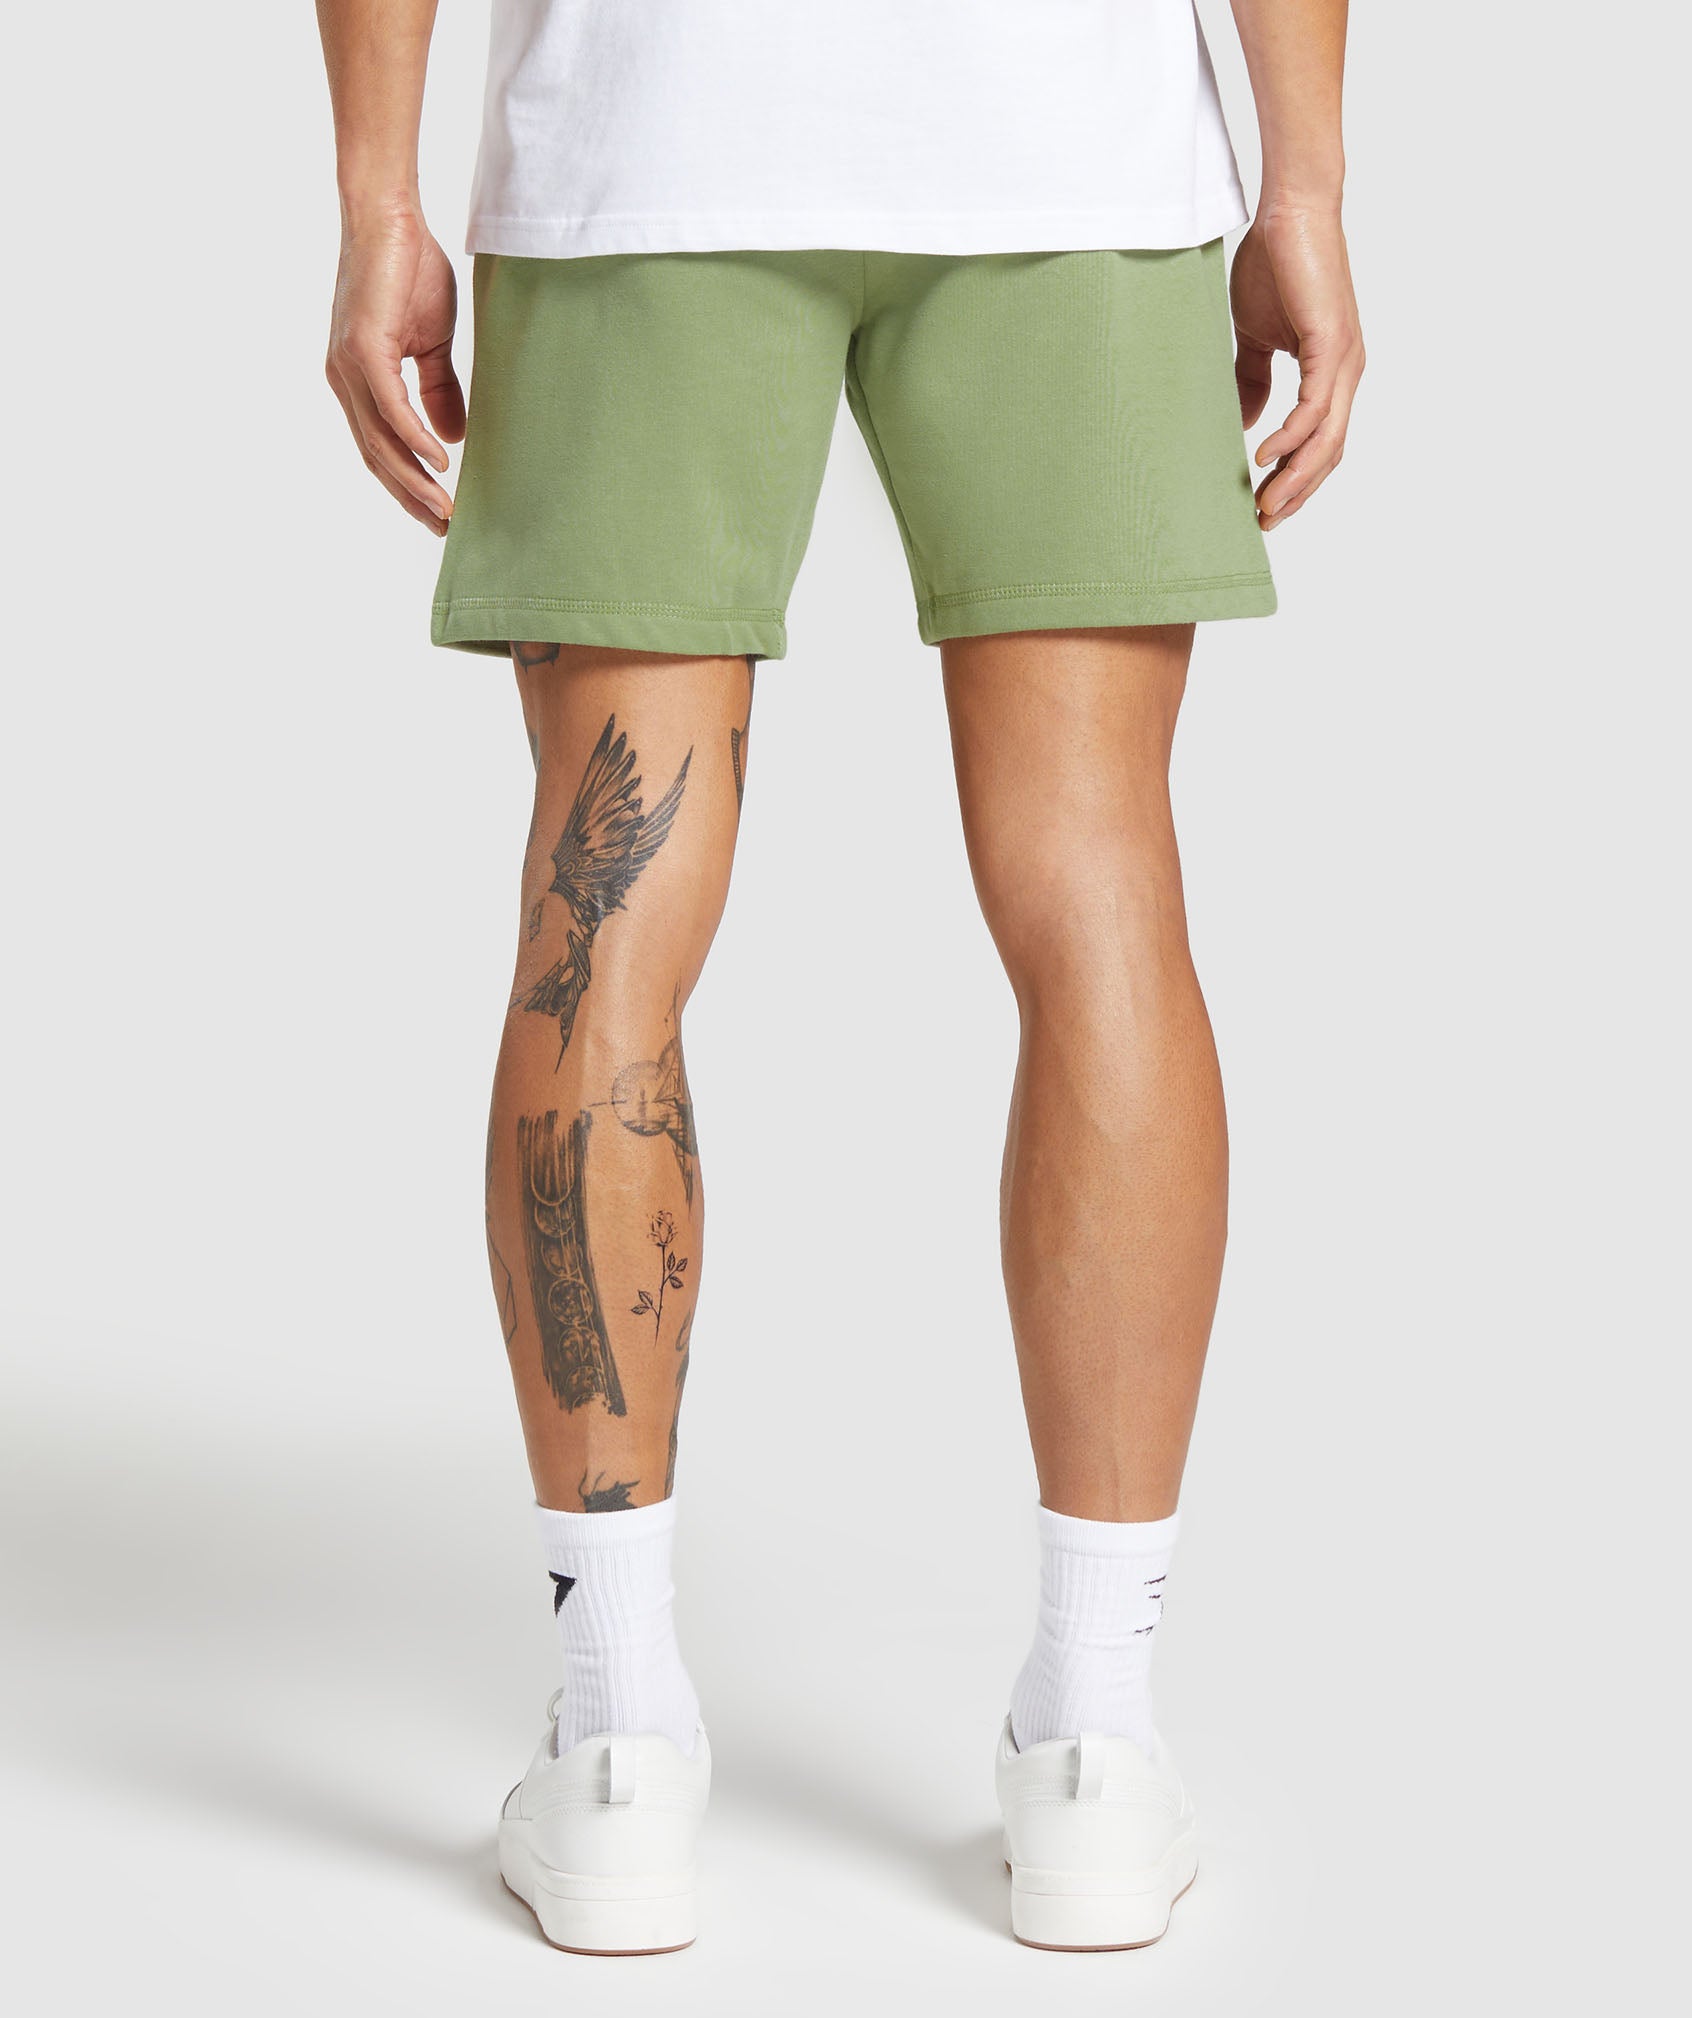 Crest 7" Shorts